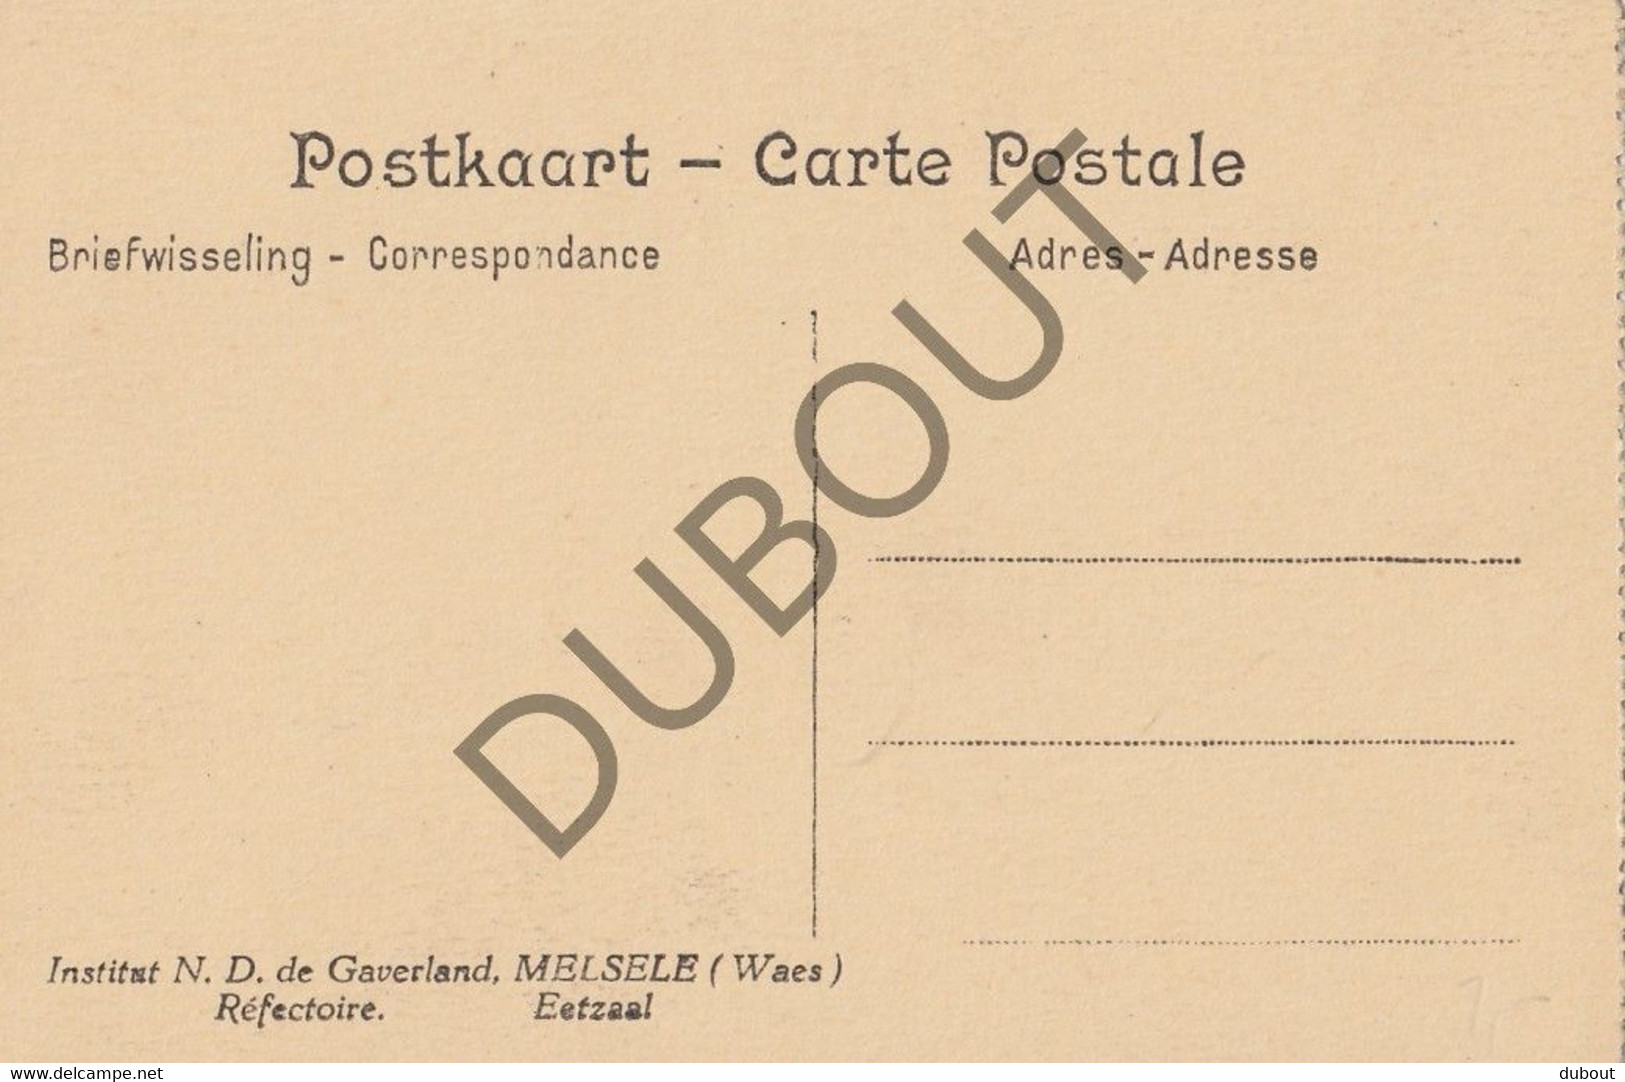 Postkaarte/Carte Postale - MELSELE - Instituut ND De Gaverland (C2766) - Beveren-Waas